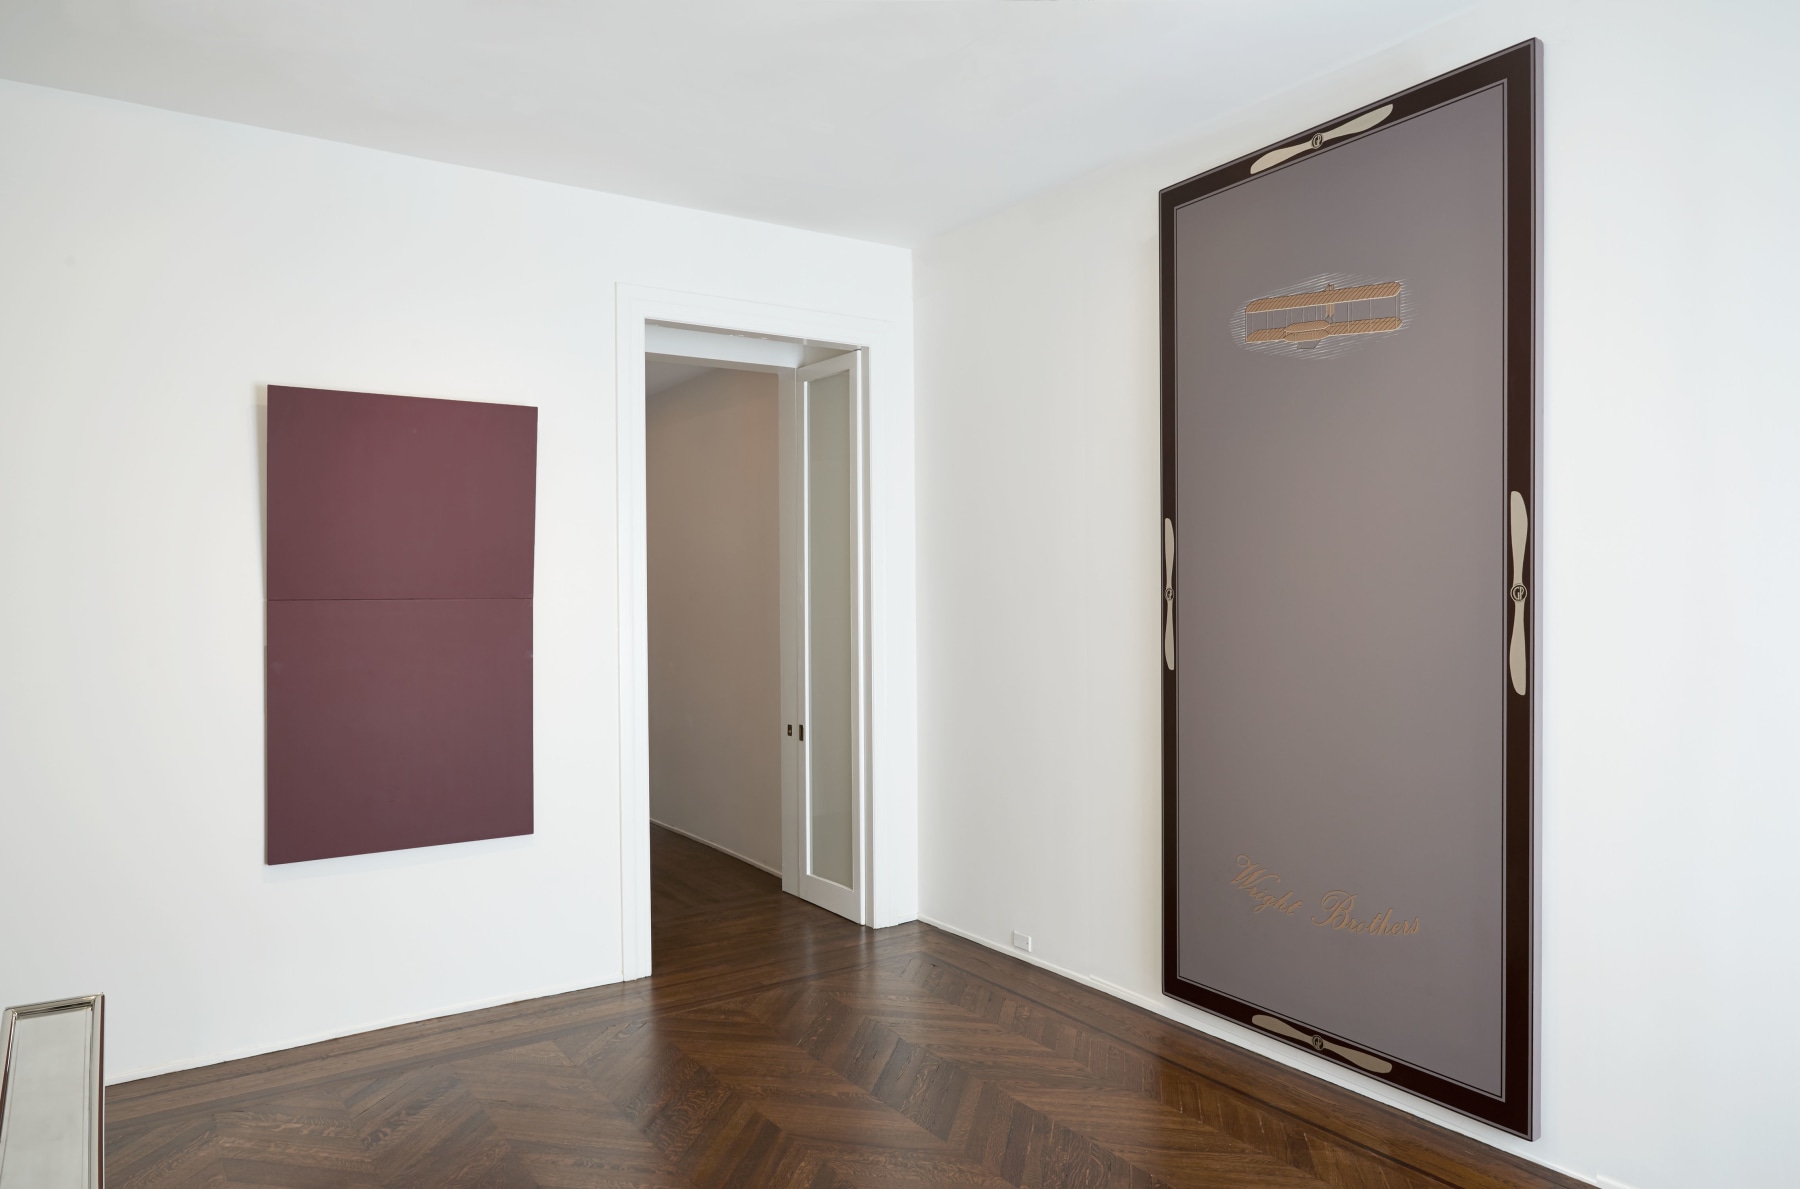 GIANNI PIACENTINO, WORKS 1965-2013, New York, 2015, Installation Image 5